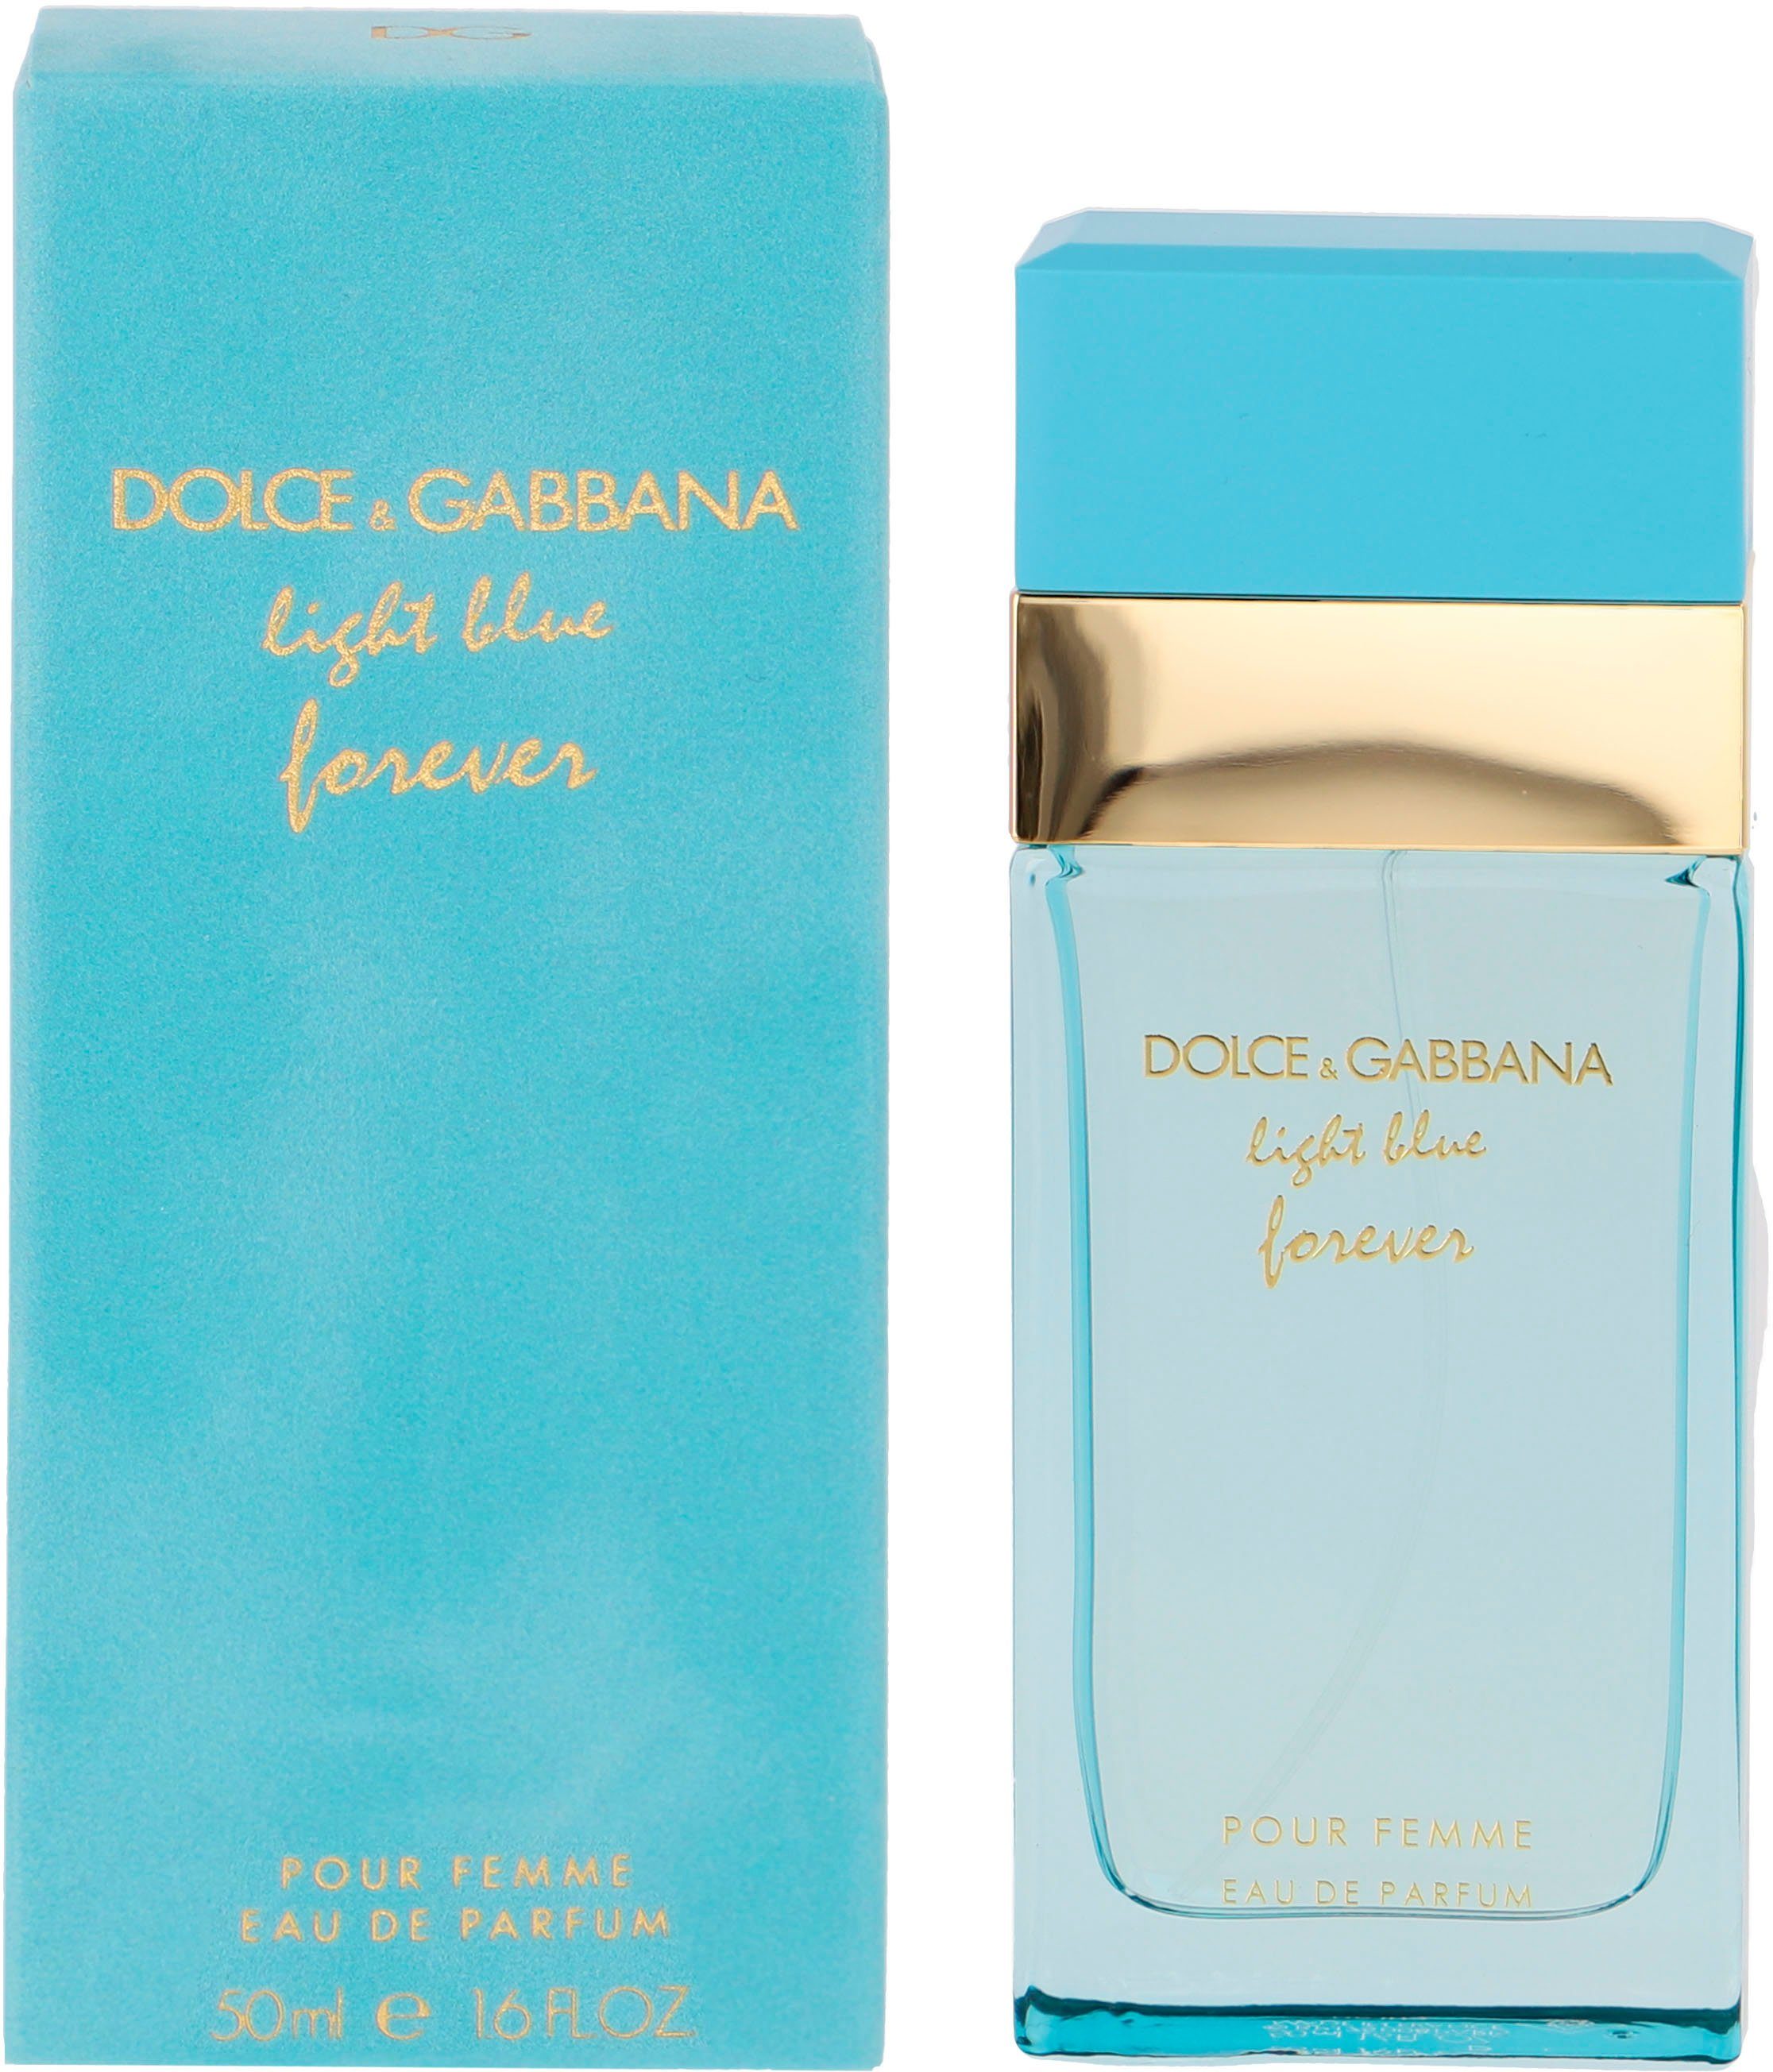 Parfum GABBANA de Blue Eau DOLCE Forever & Light